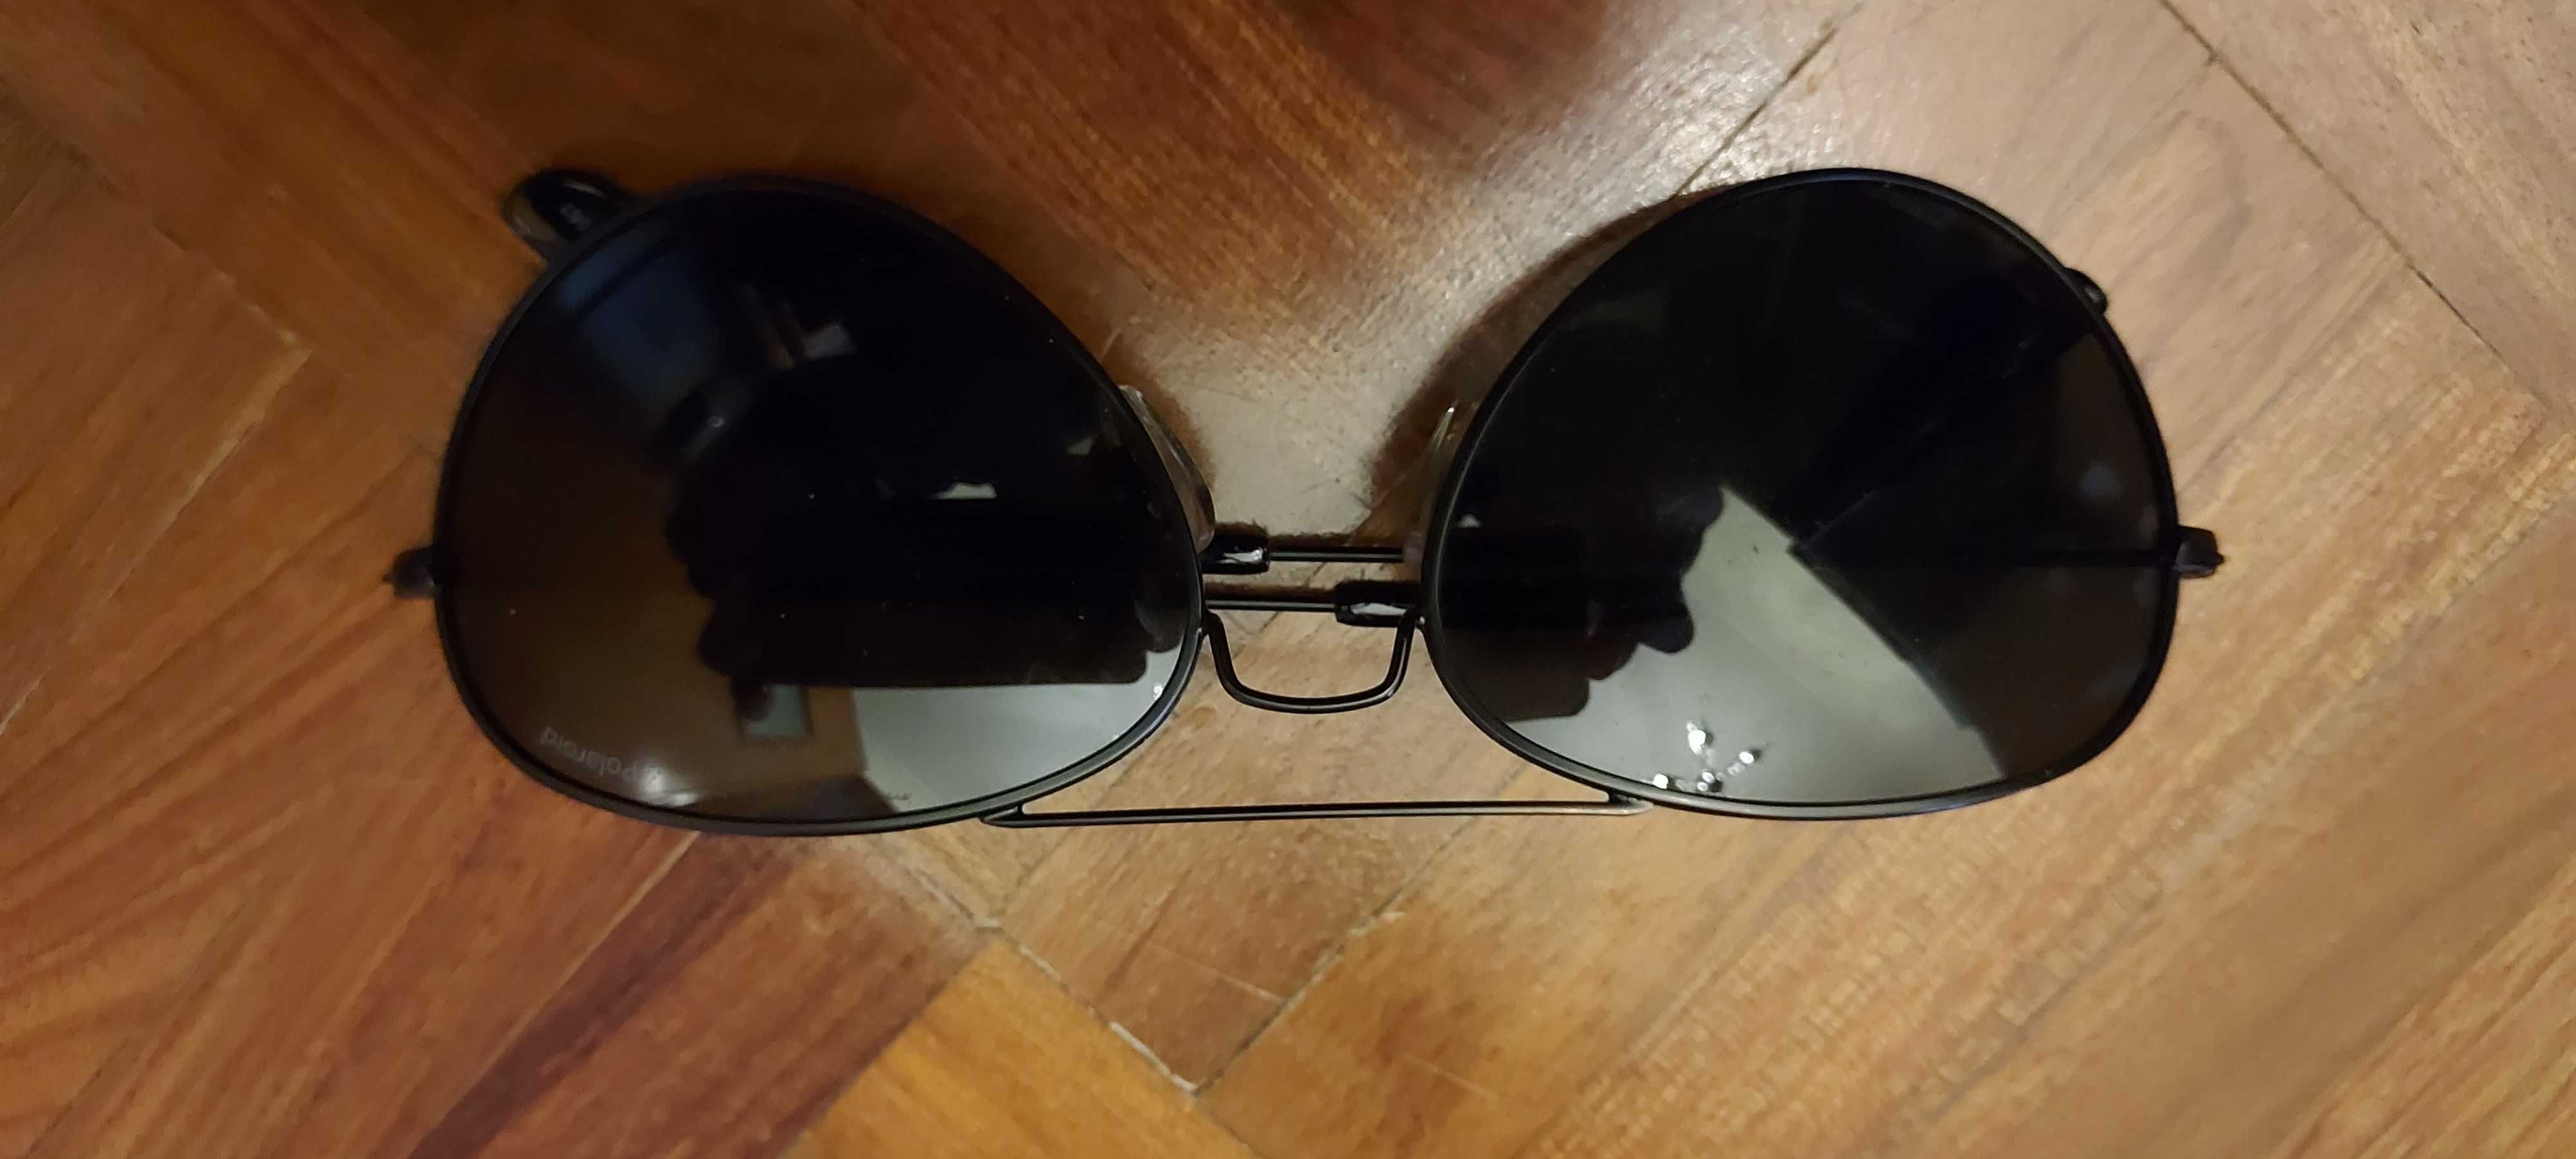 oculos de sol polarizados - Marca Polaroid